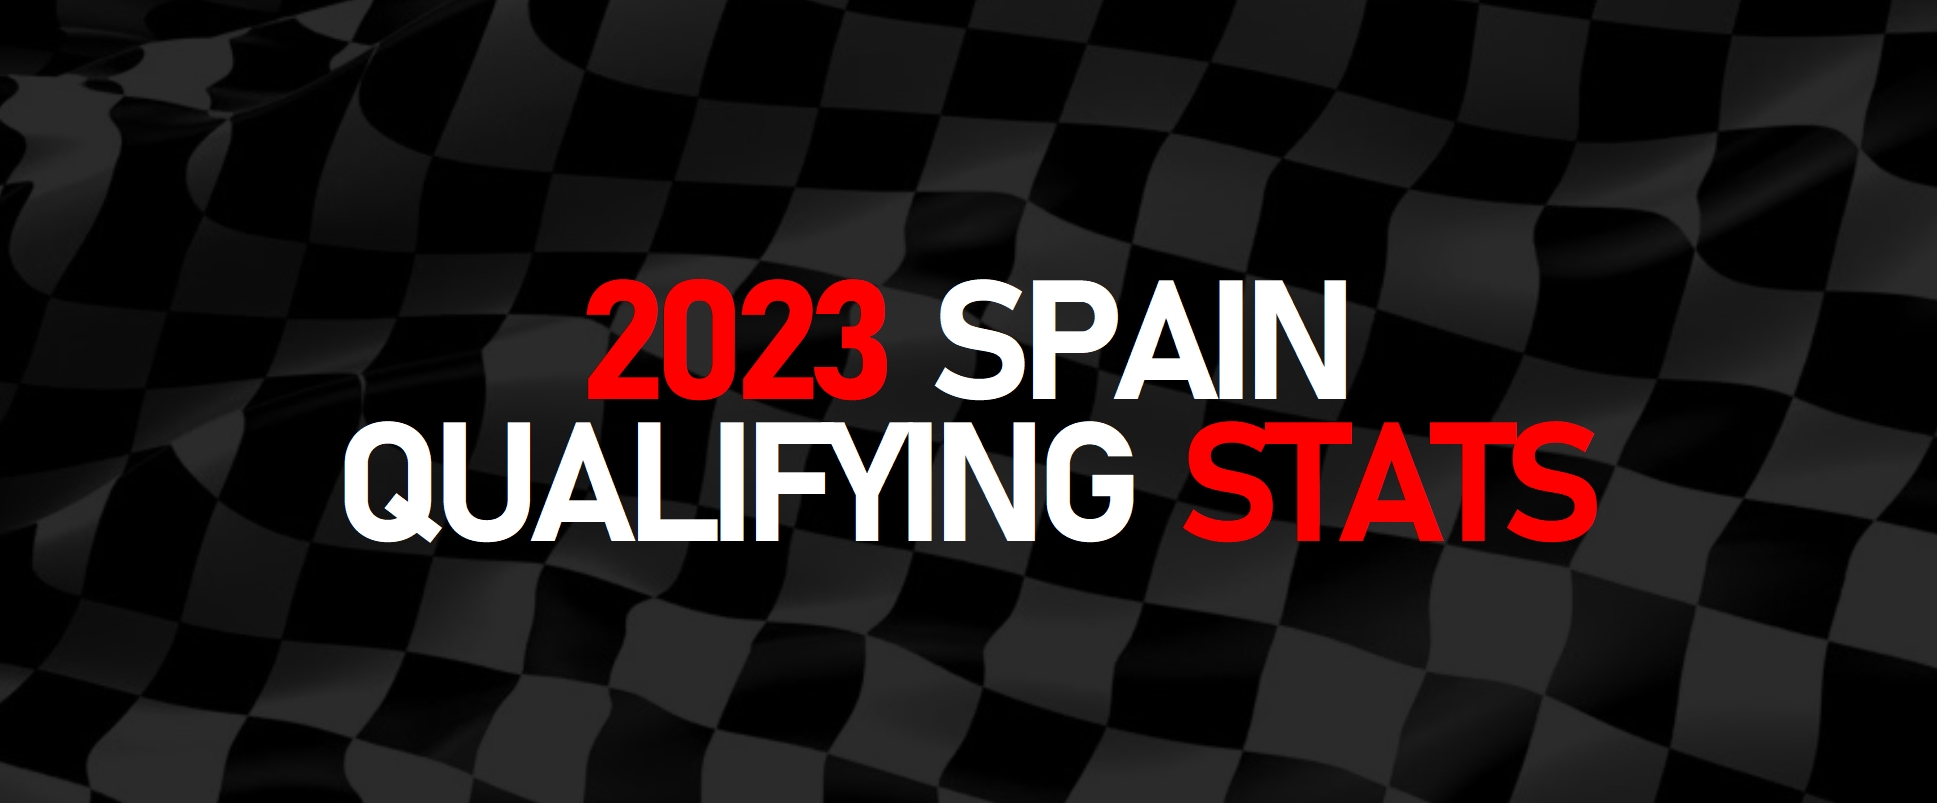 2023 Spanish Grand Prix Qualifying Statistics 